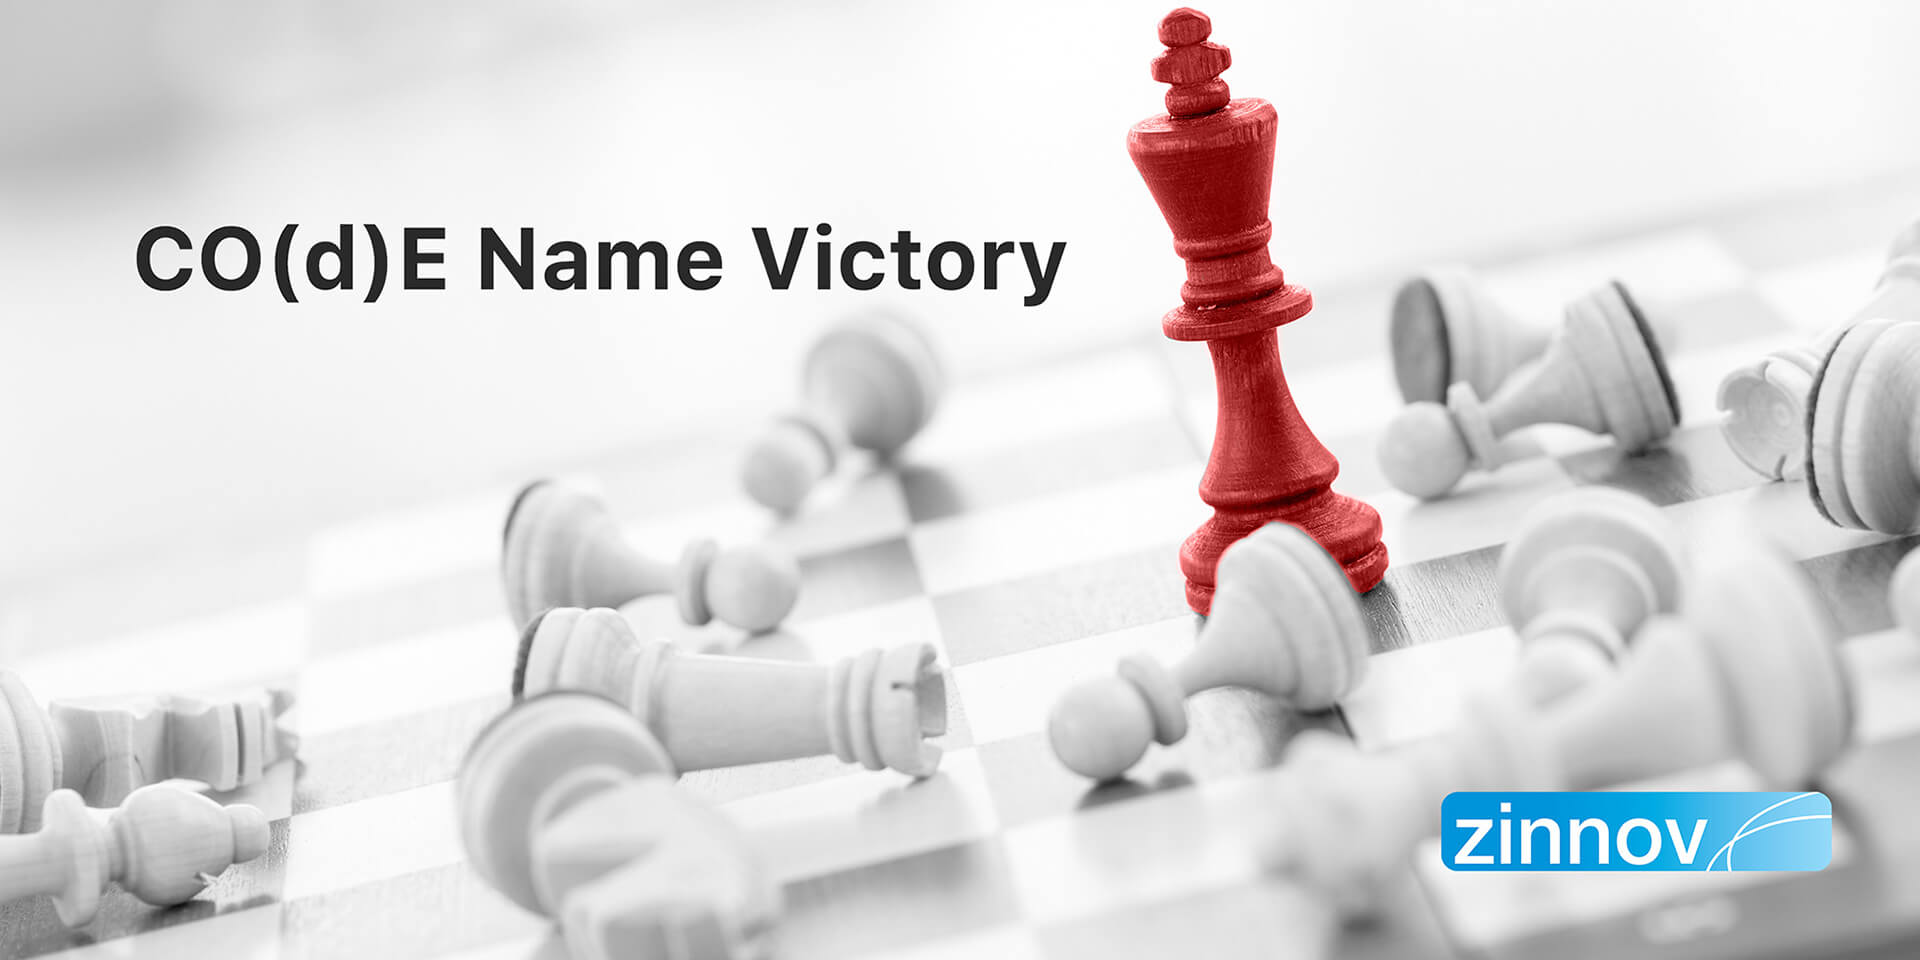 CO(d) E name Victory